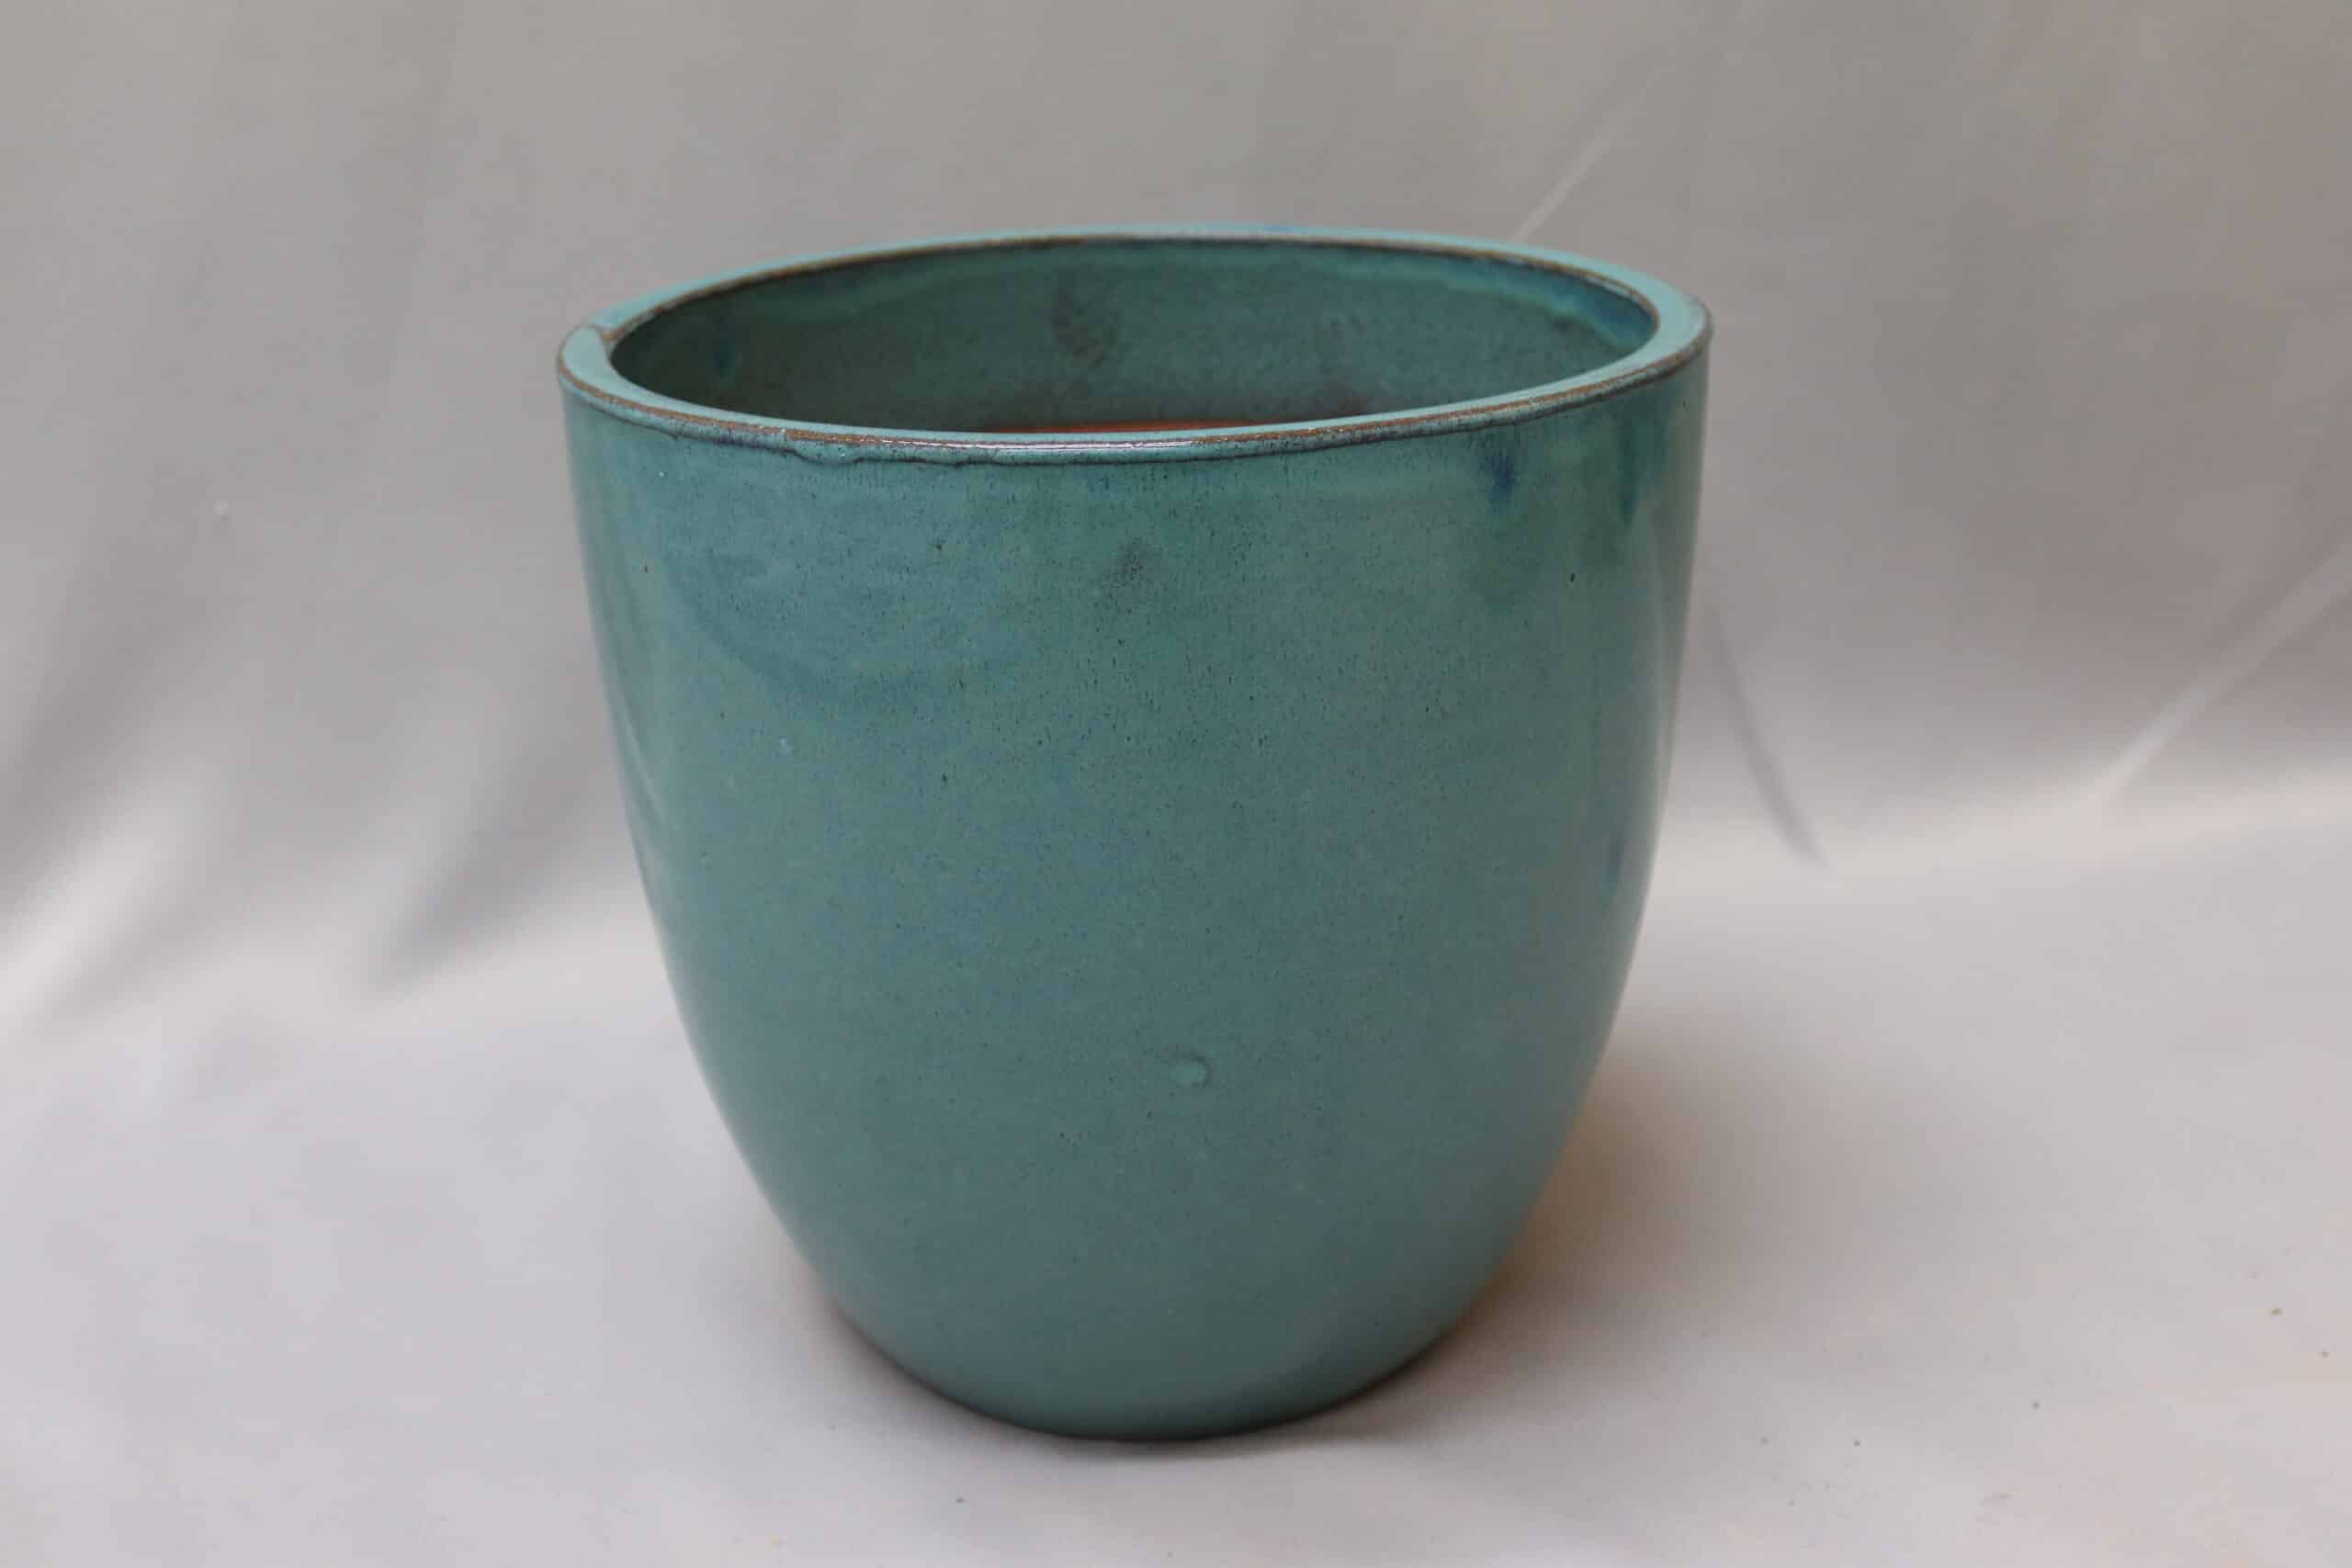 Green egg-shaped glazed ceramic pot.